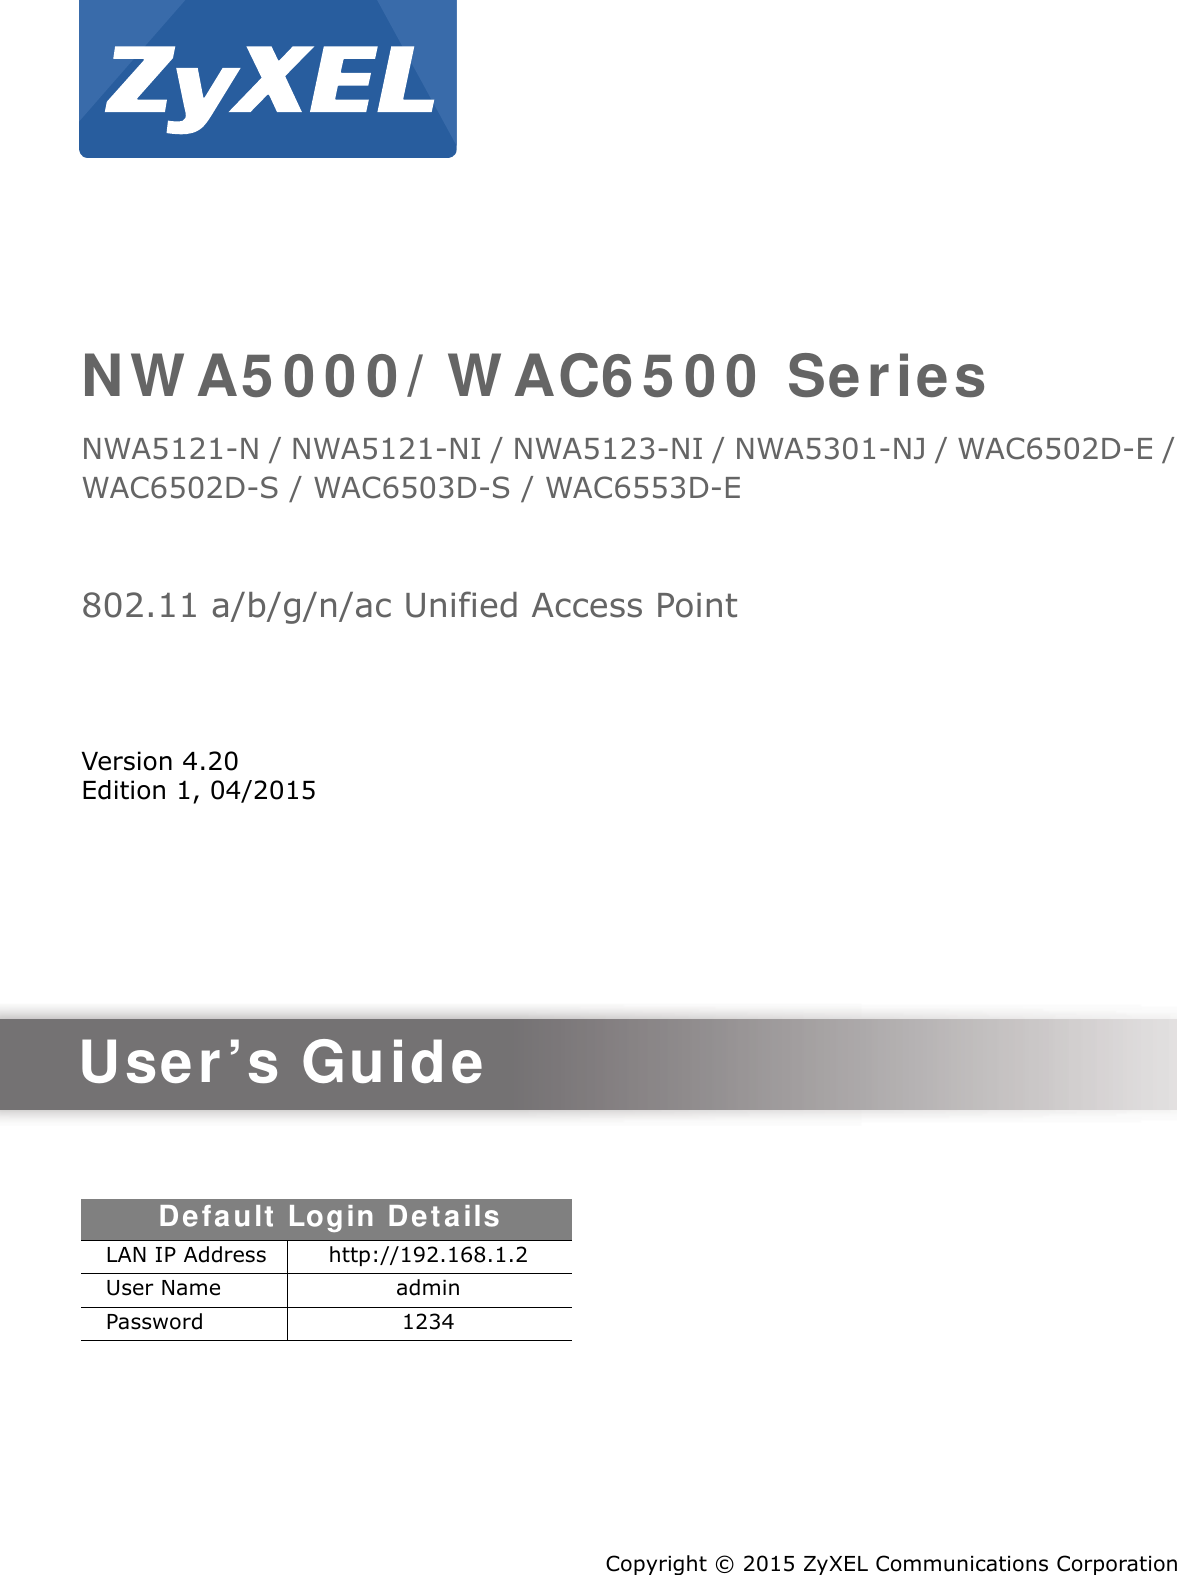 Quick Start Guidewww.zyxel.comN W A5 0 0 0 / W AC6 5 0 0  SeriesNWA5121-N / NWA5121-NI / NWA5123-NI / NWA5301-NJ / WAC6502D-E / WAC6502D-S / WAC6503D-S / WAC6553D-E802.11 a/b/g/n/ac Unified Access PointVersion 4.20Edition 1, 04/2015Copyright © 2015 ZyXEL Communications CorporationUser’s GuideDefault  Login De t ailsLAN IP Address http://192.168.1.2User Name adminPassword 1234